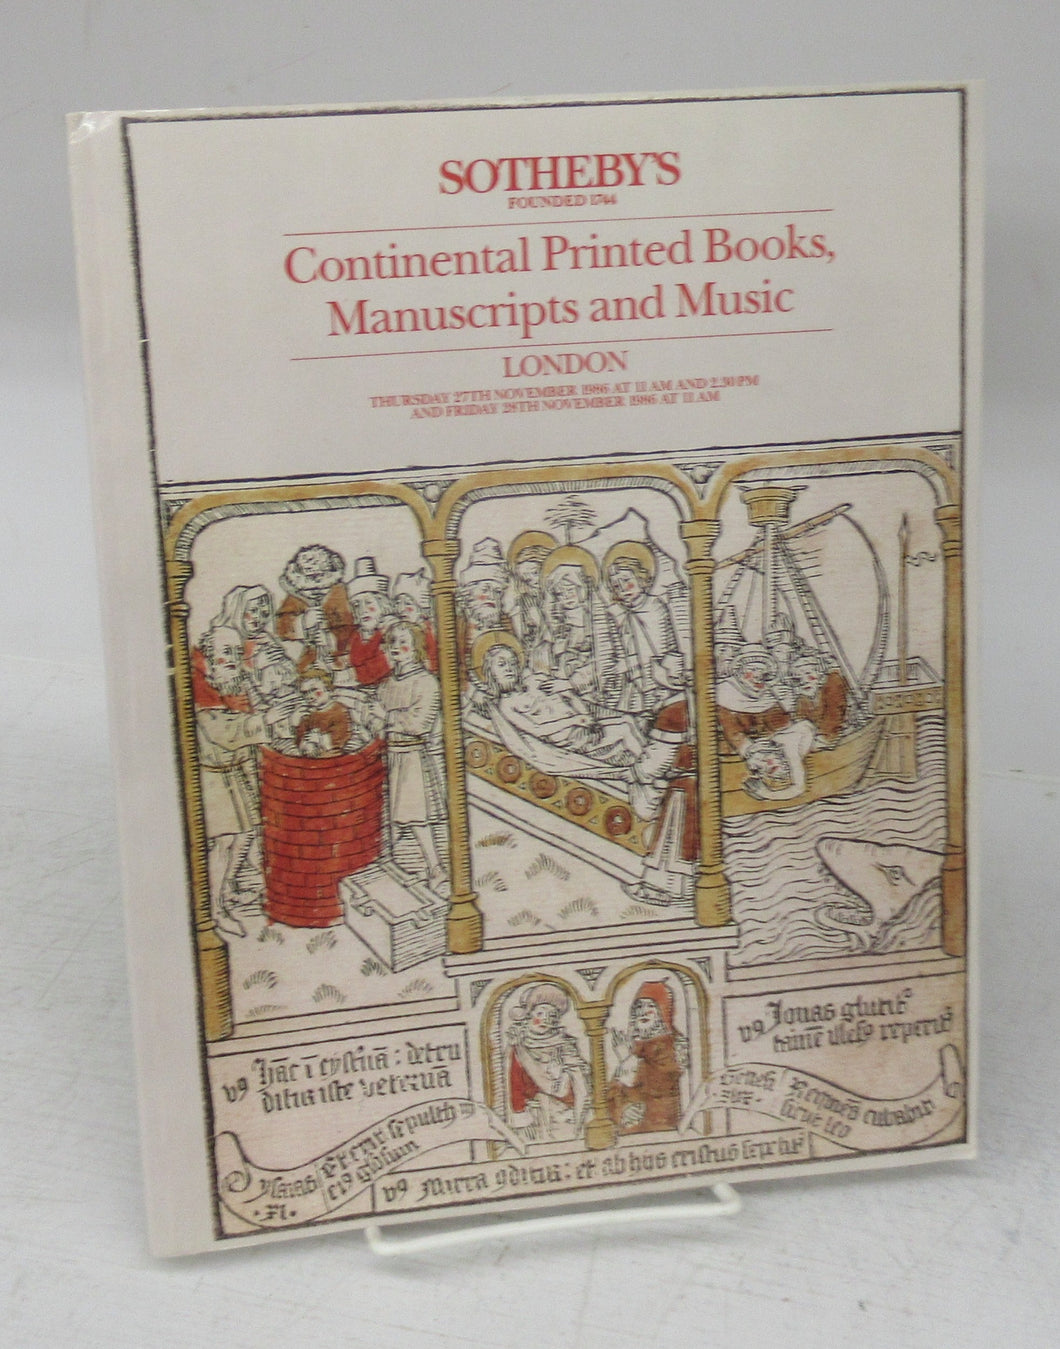 Continental Printed Books, Manuscripts and Music, November 27th & 28th, 1986